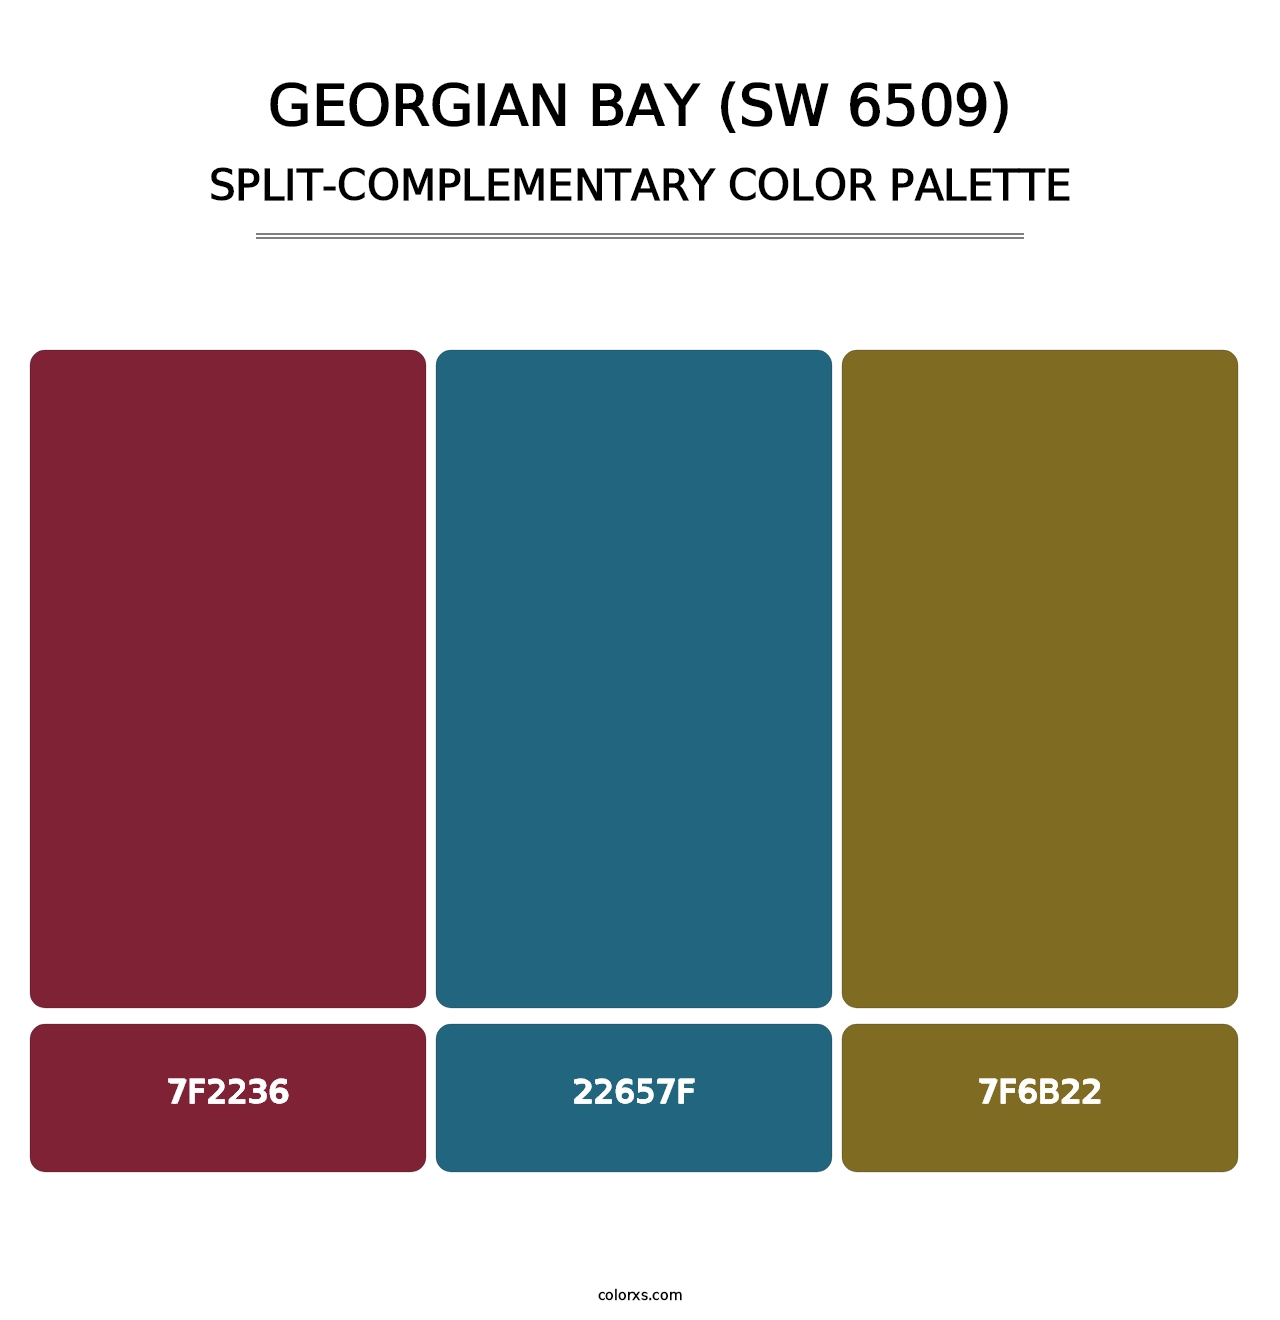 Georgian Bay (SW 6509) - Split-Complementary Color Palette